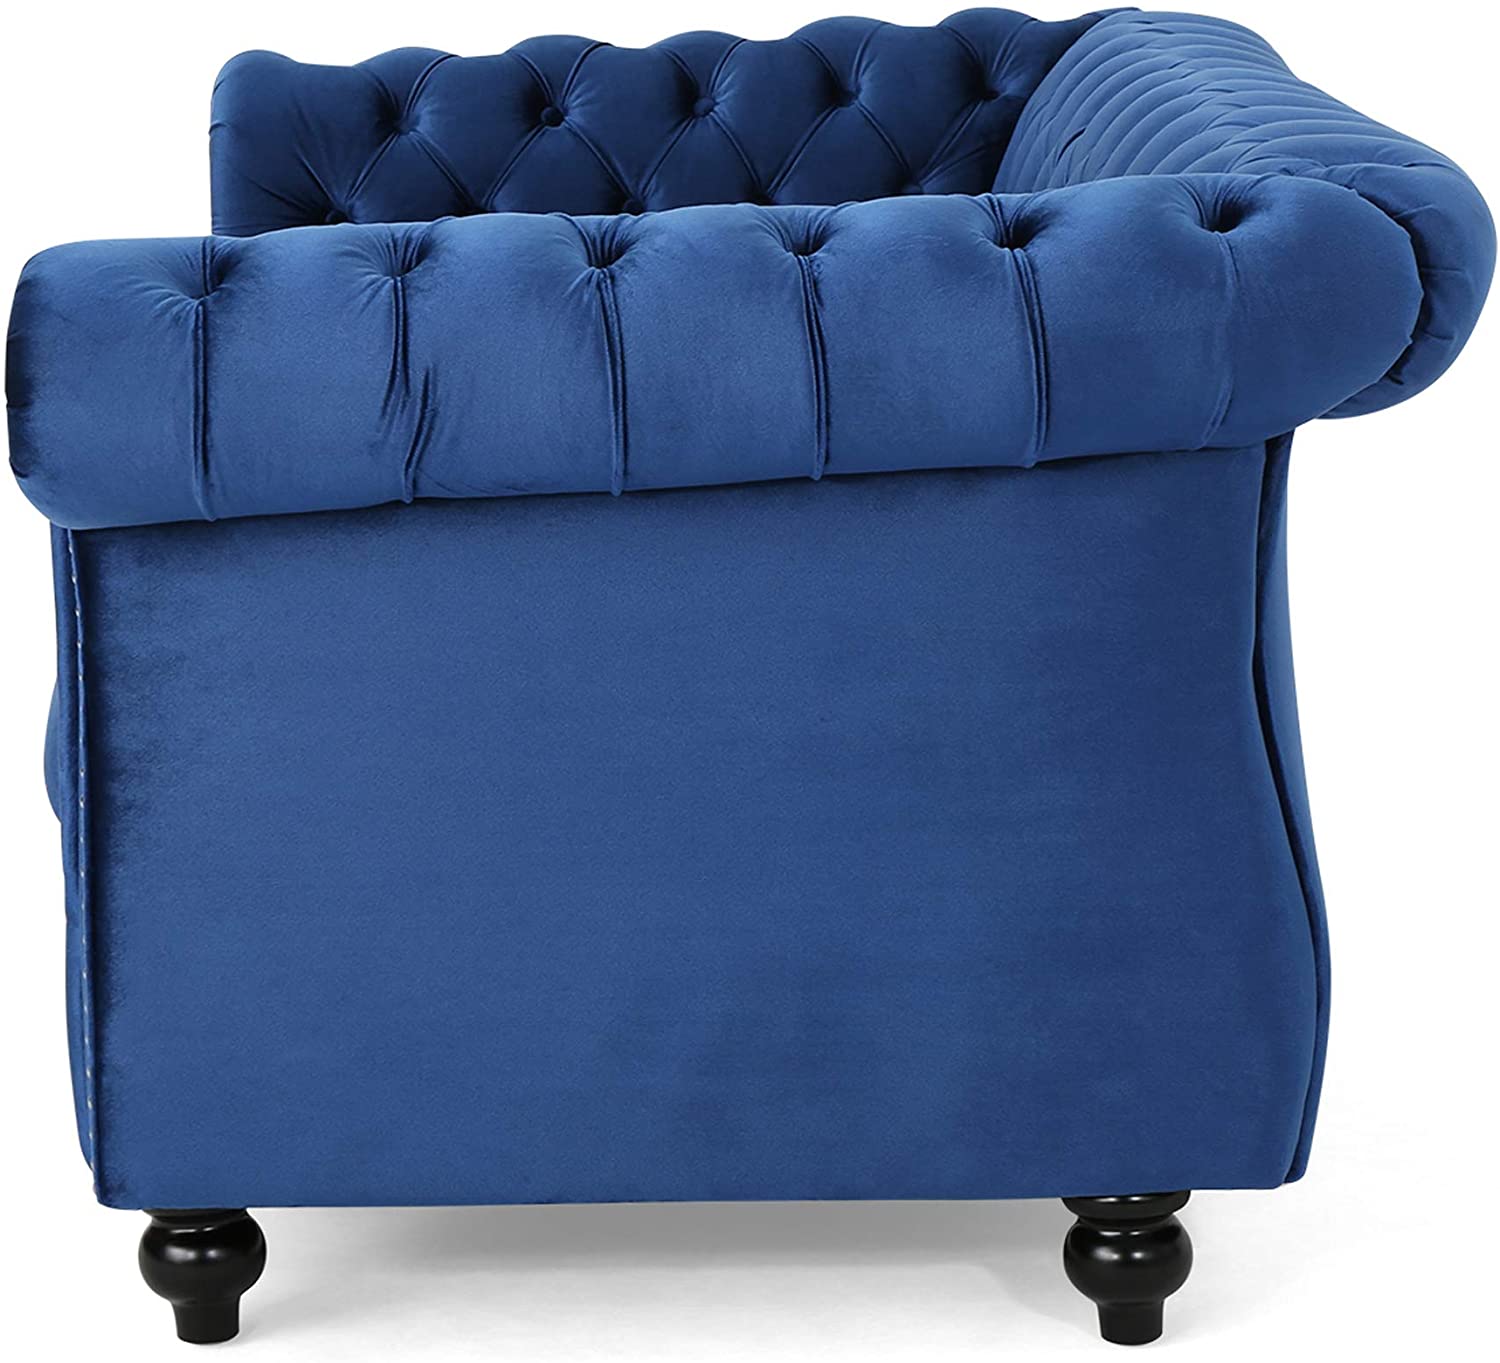 Karen Traditional Chesterfield Loveseat Sofa, Navy Blue and Dark Brown, 61.75 x 33.75 x 27.75